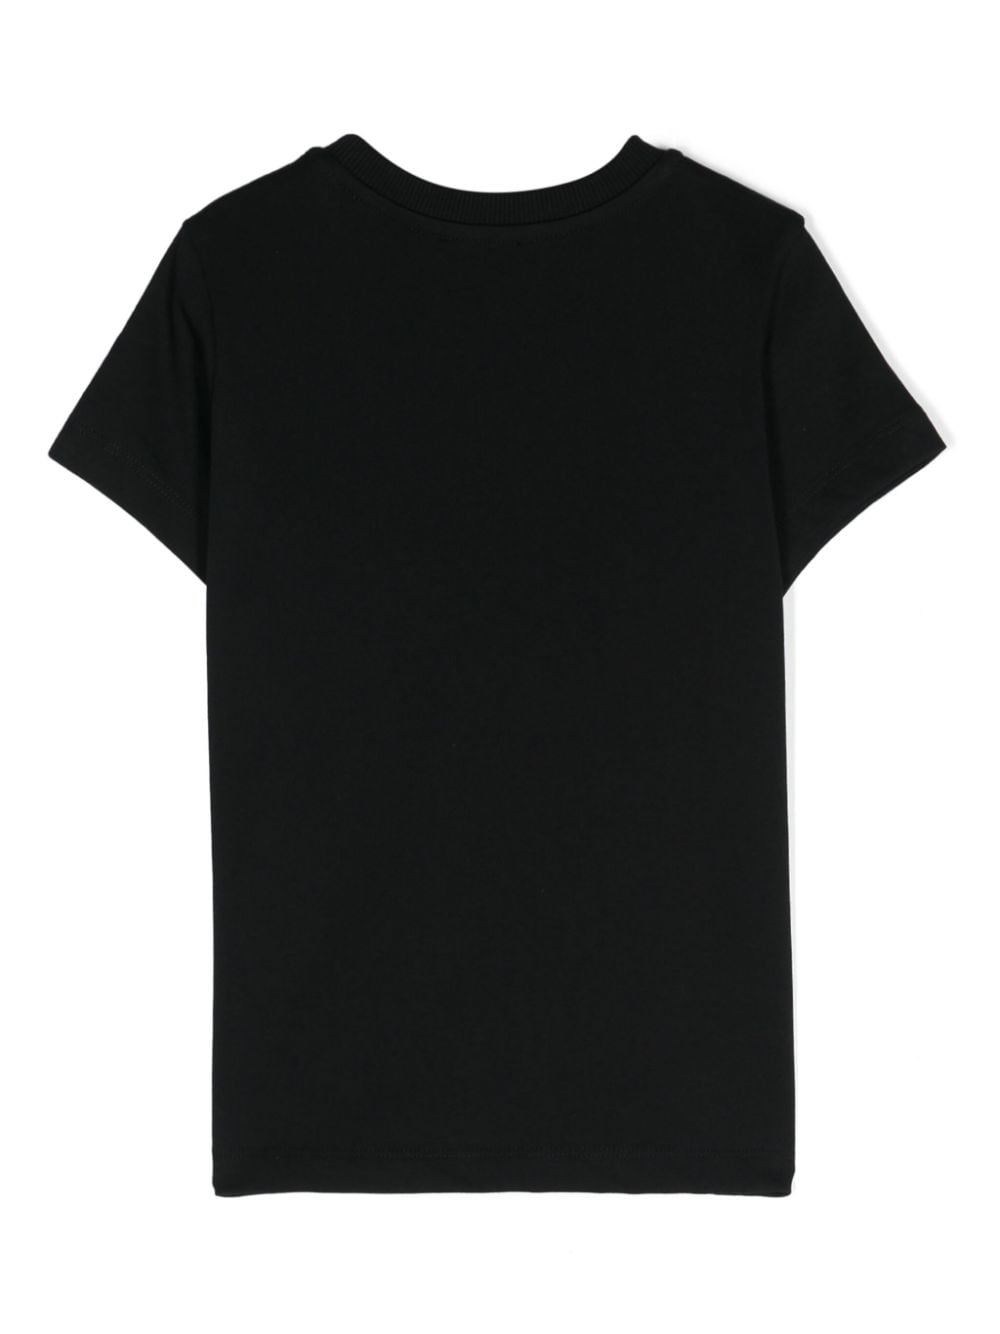 Unisex black cotton t-shirt with print